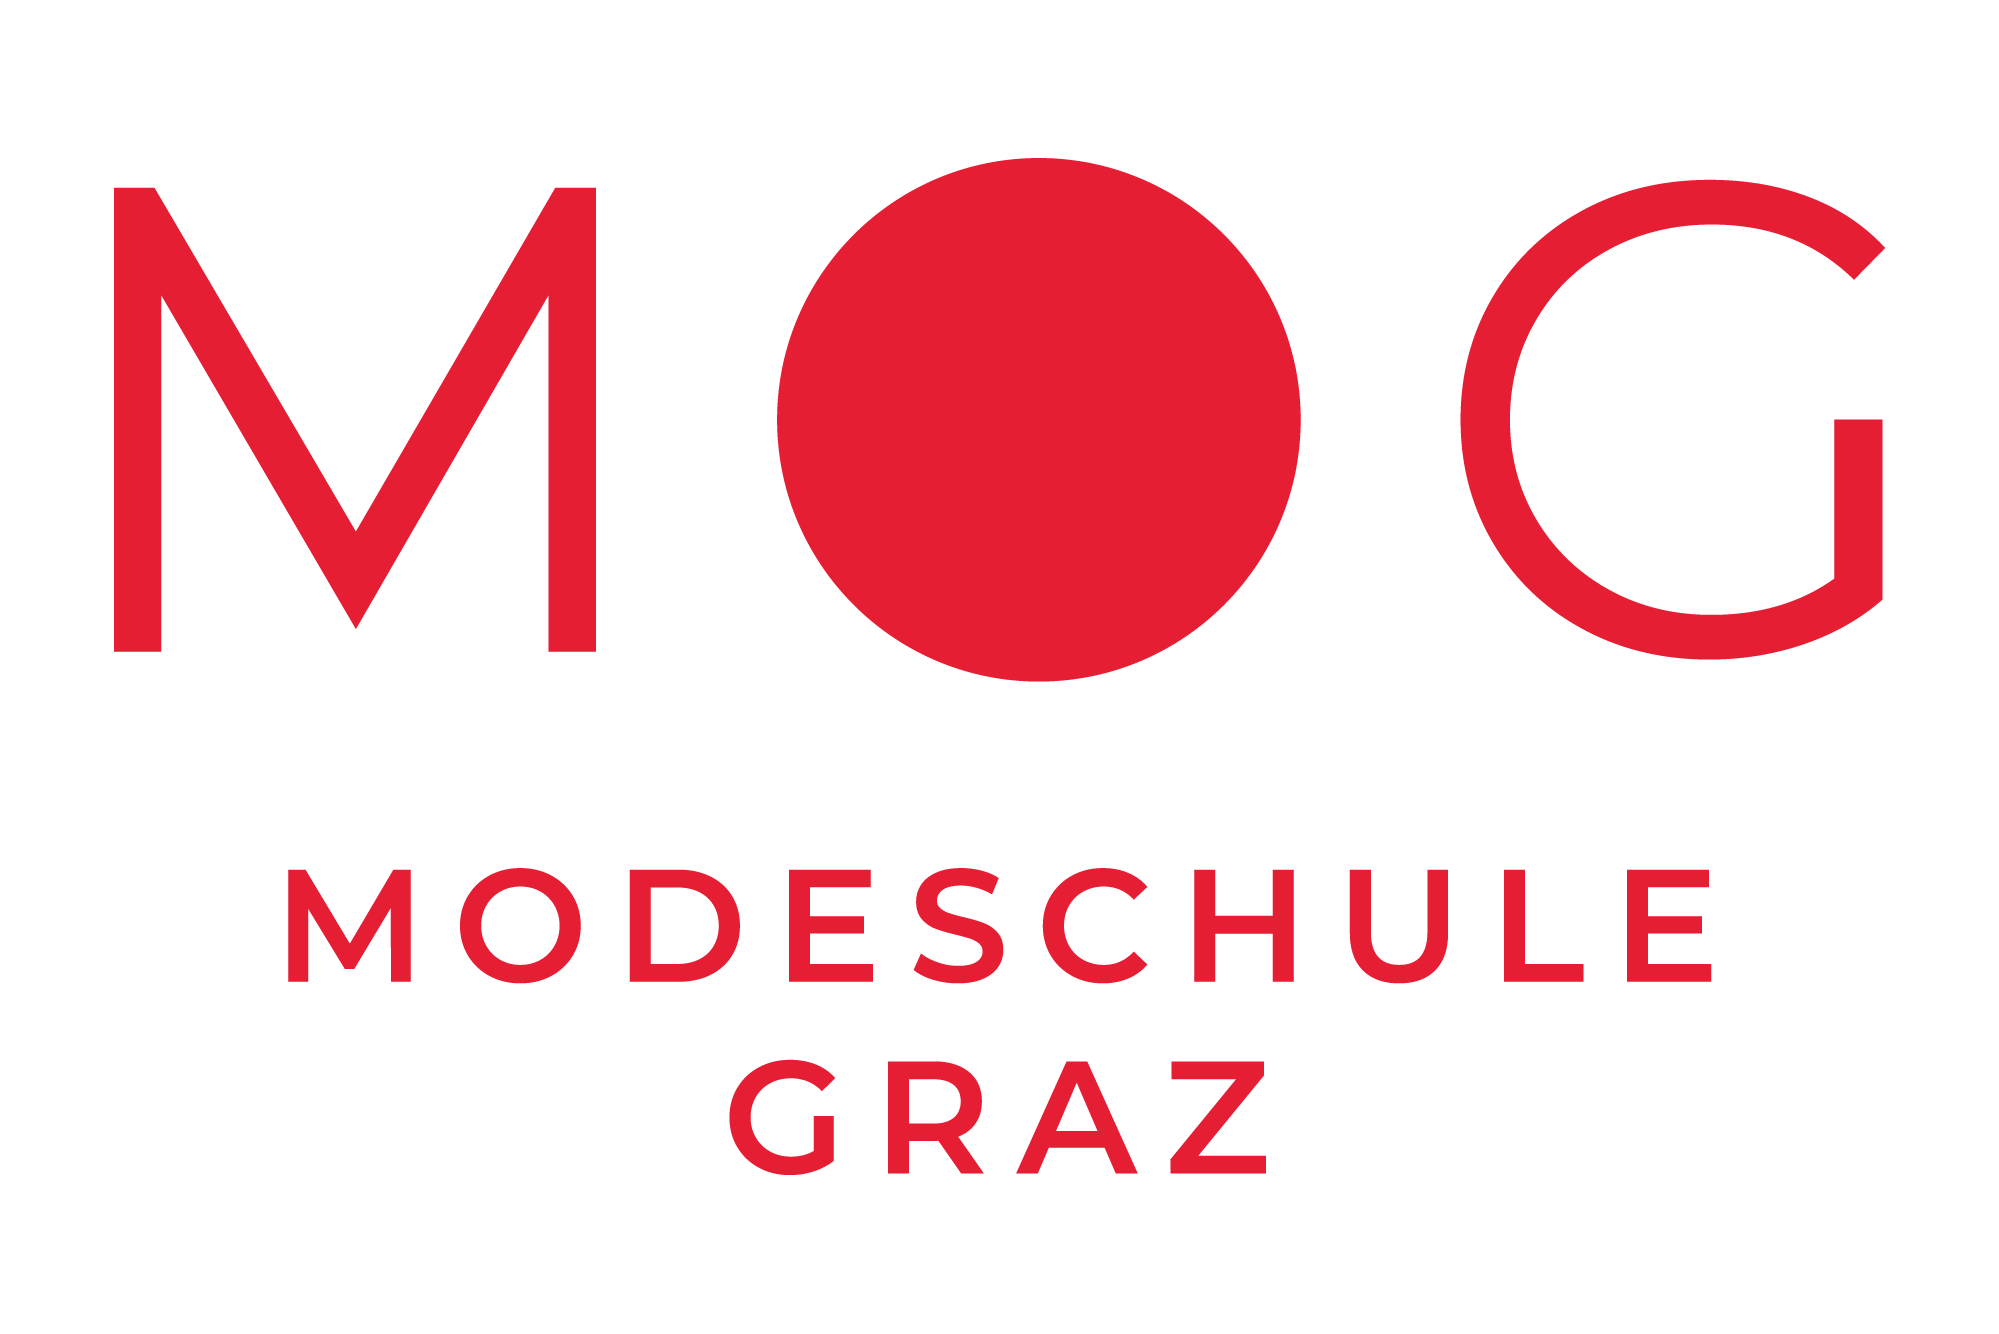 Modeschule Graz